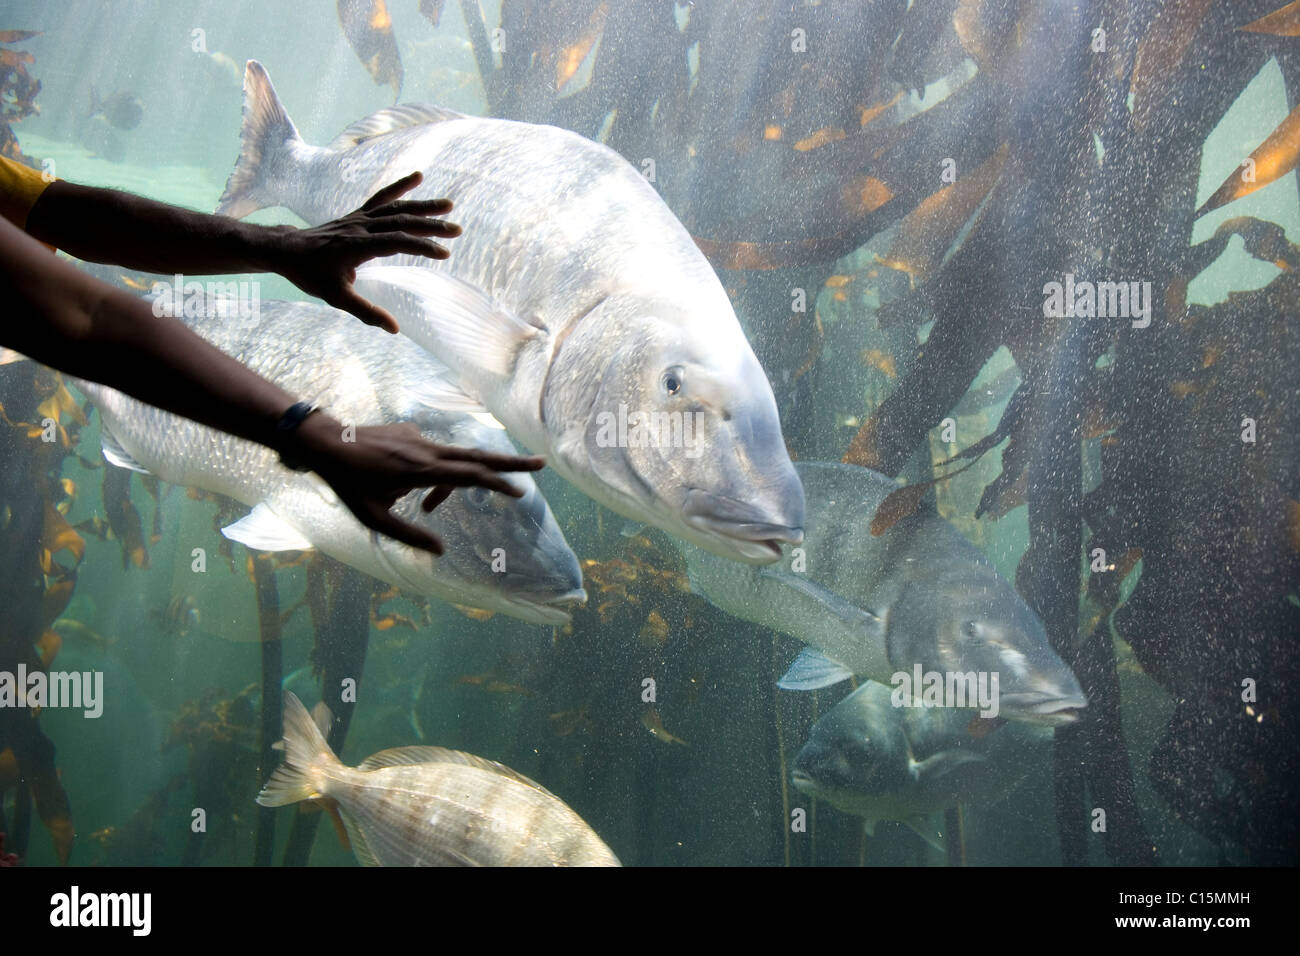 Two Oceans Aquarium - la foresta di Kelp presentano. Steenbras lithognathus lithognathus Foto Stock